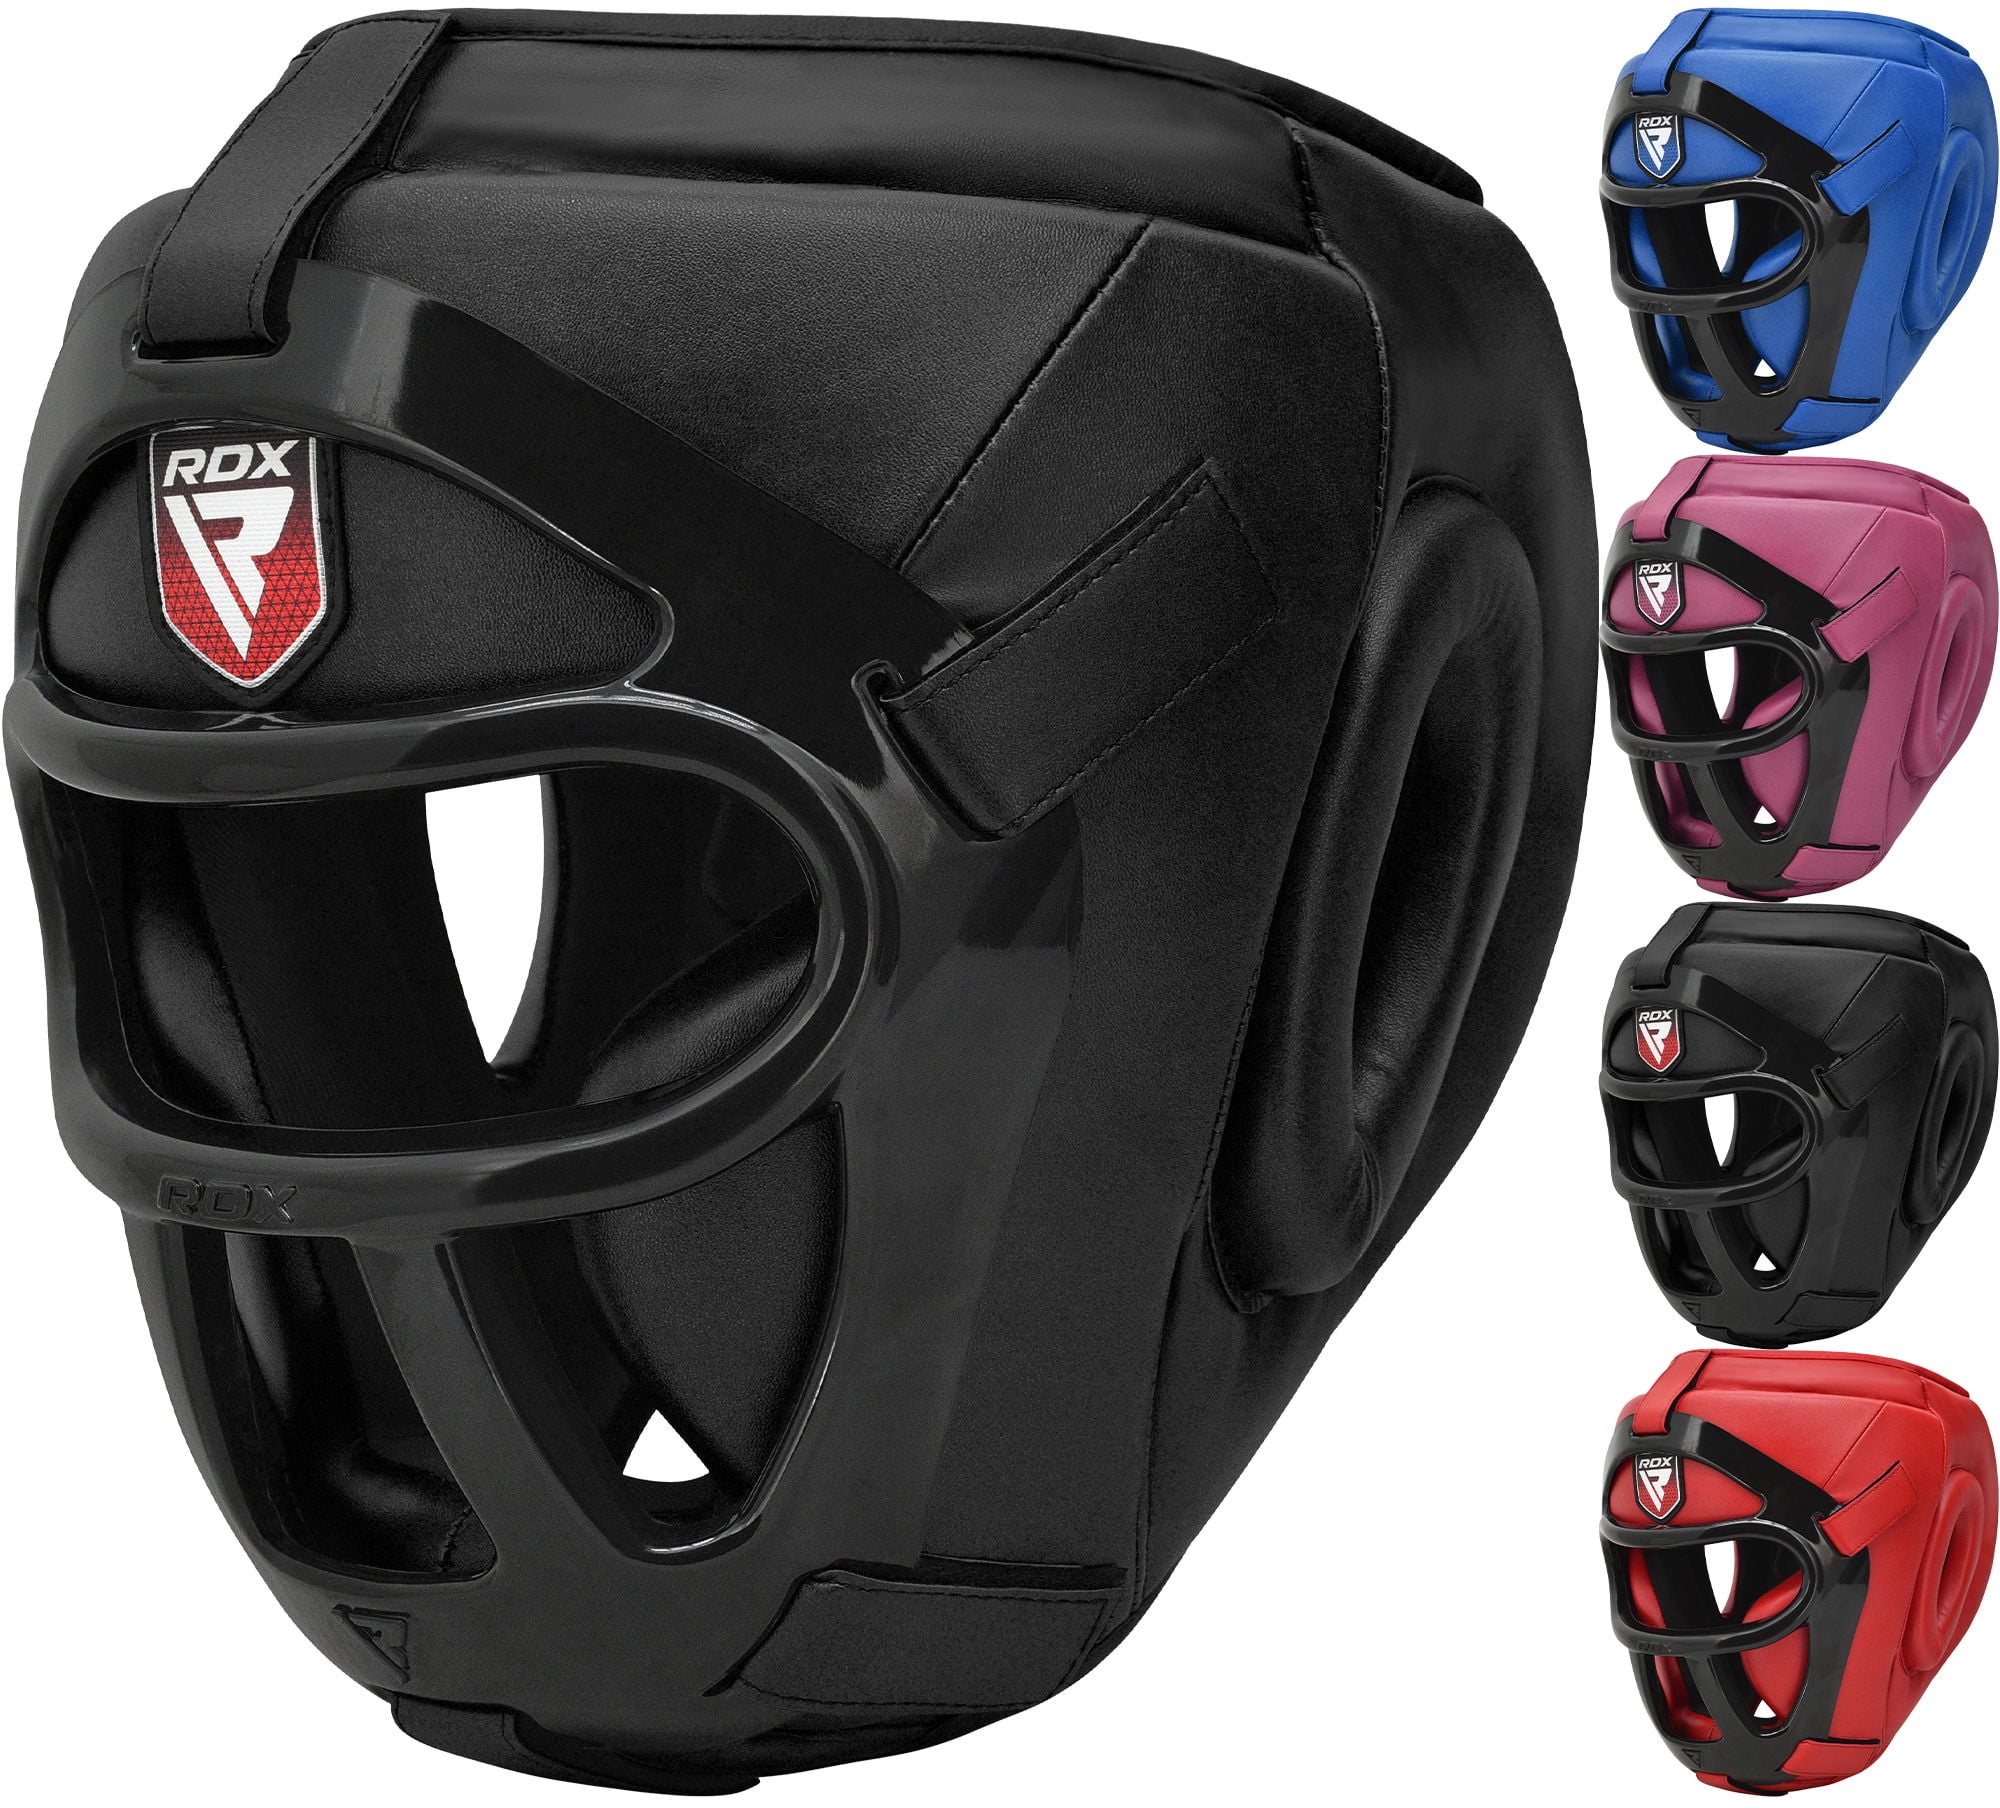 RDX Leather Headgear Face Guard Protector Boxing Helmet MMA Black Head Guard US 